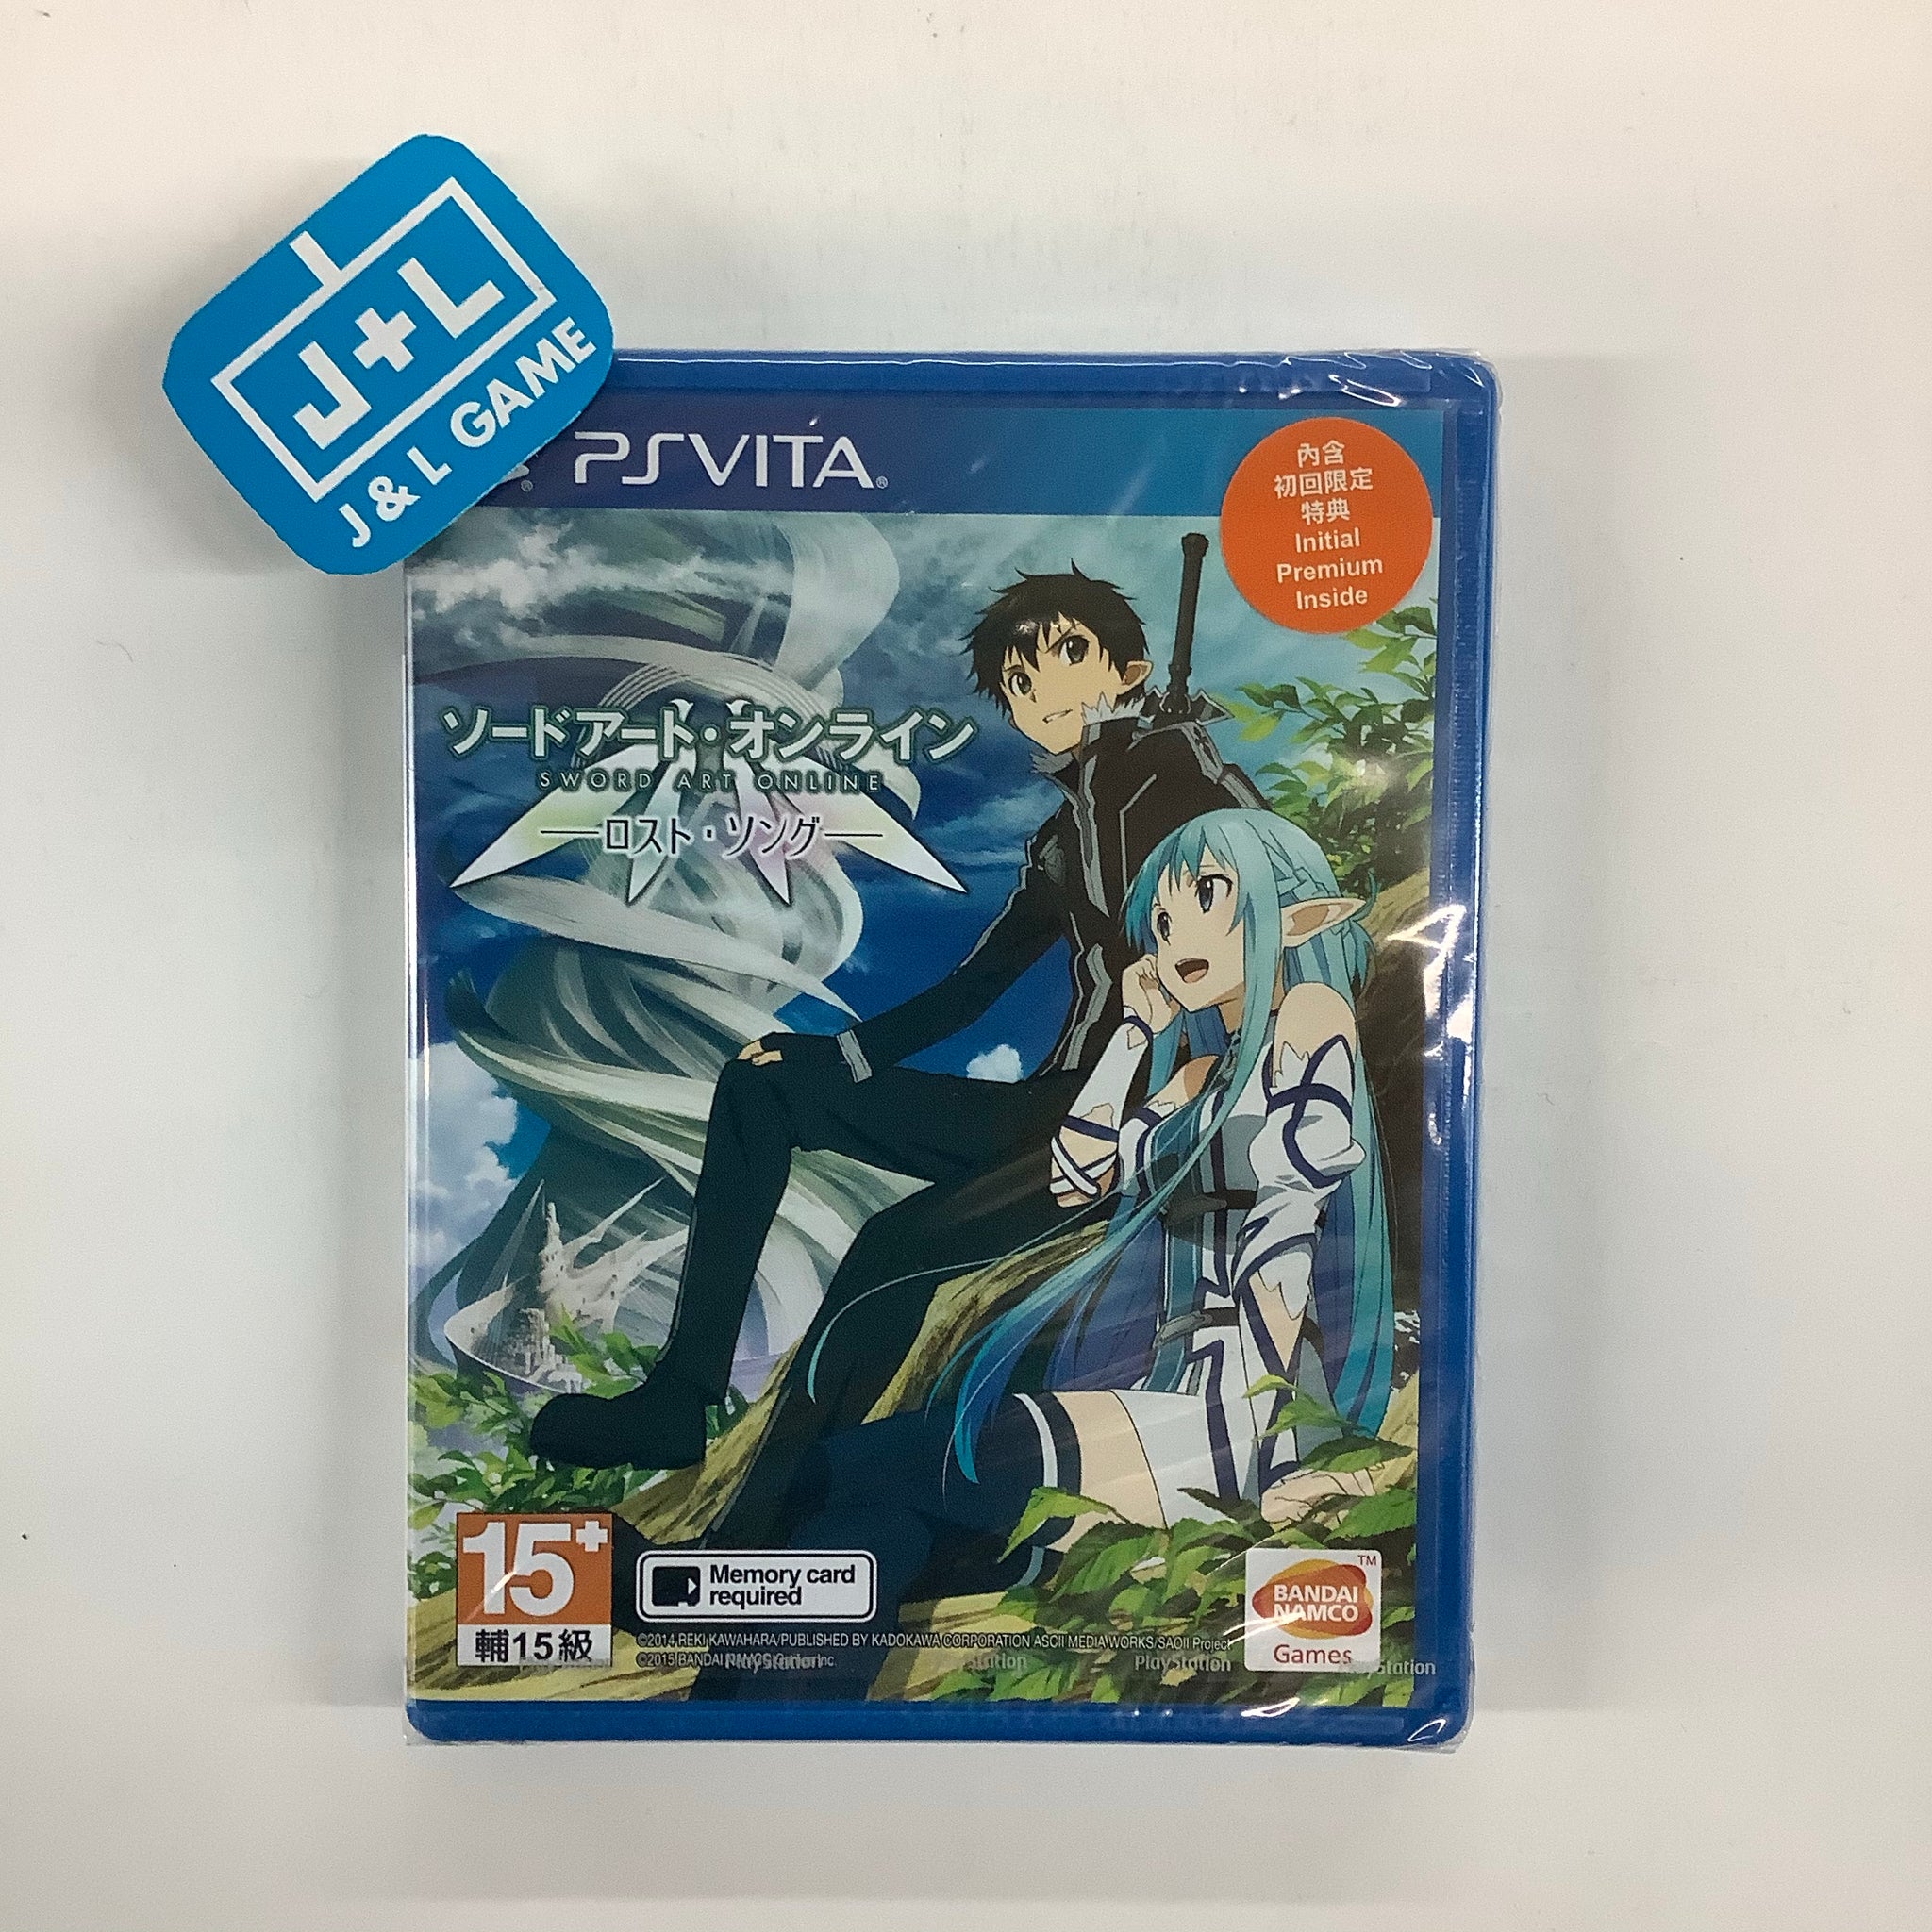 Sword Art Online: Lost Song (Japanese Sub) - (PSV) PlayStation Vita (Asia Import) Video Games Bandai Namco Games   